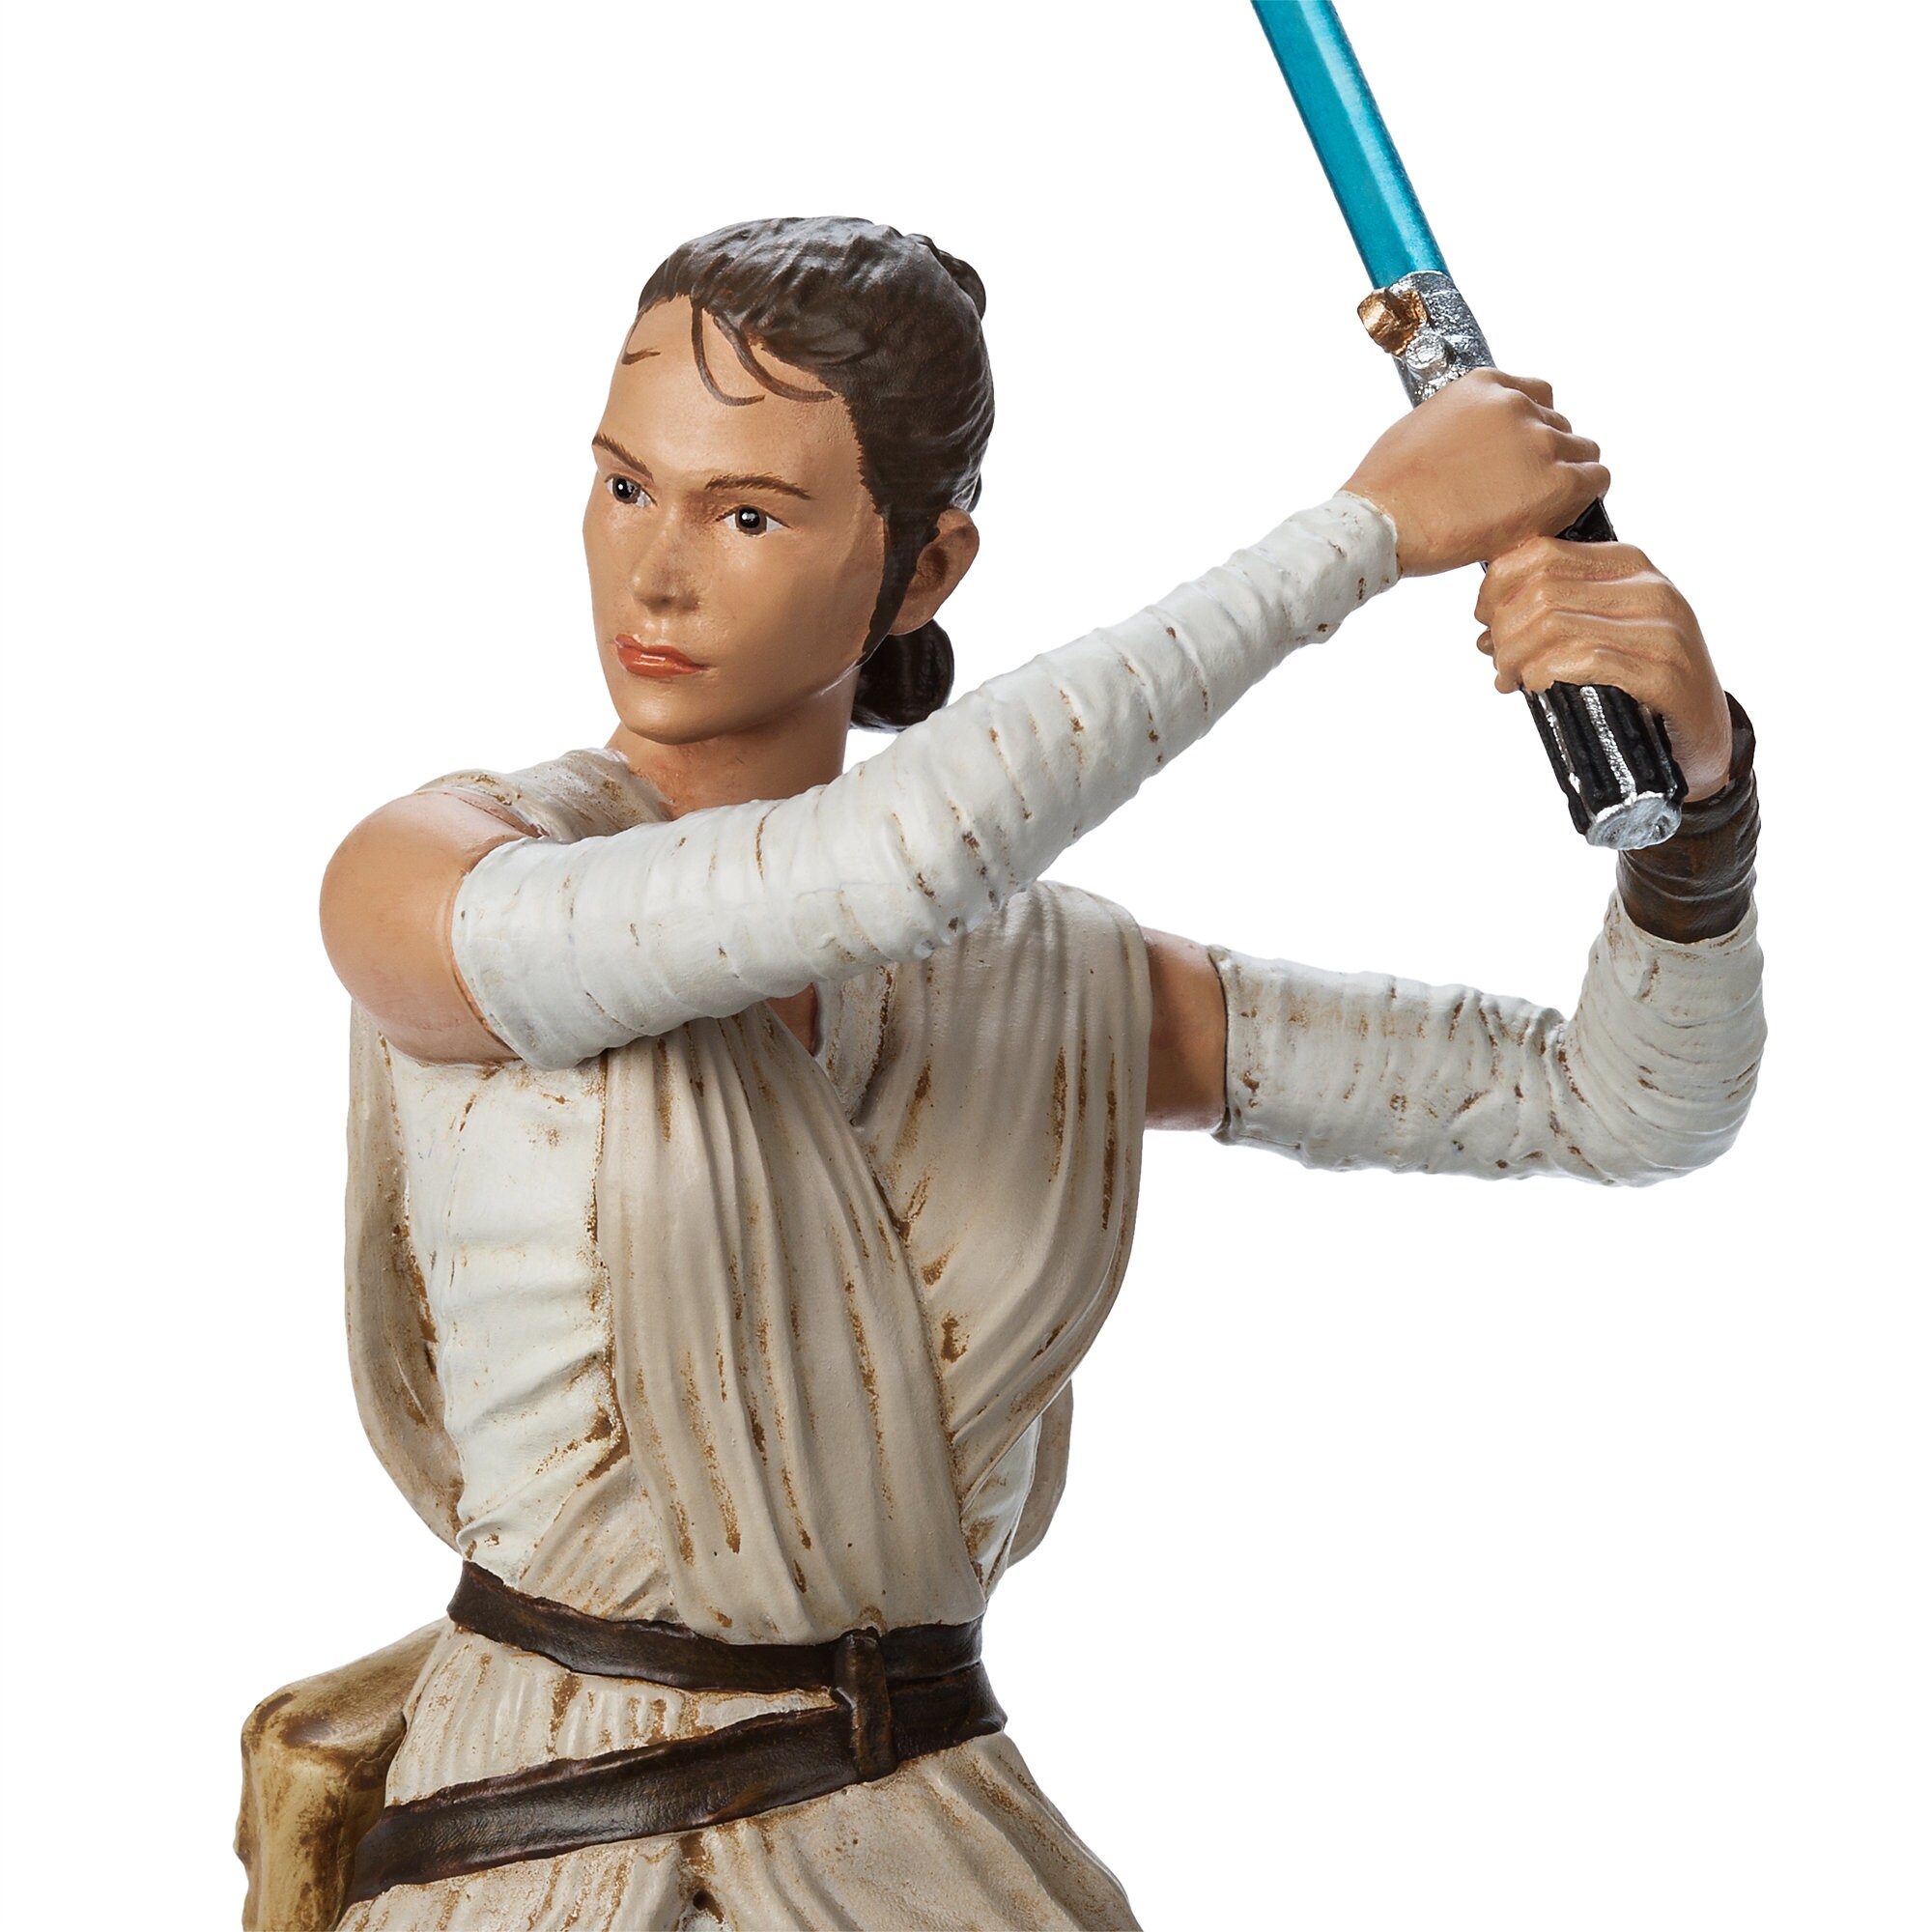 Kylo Ren and Rey Figurine Set - Star Wars: The Force Awakens